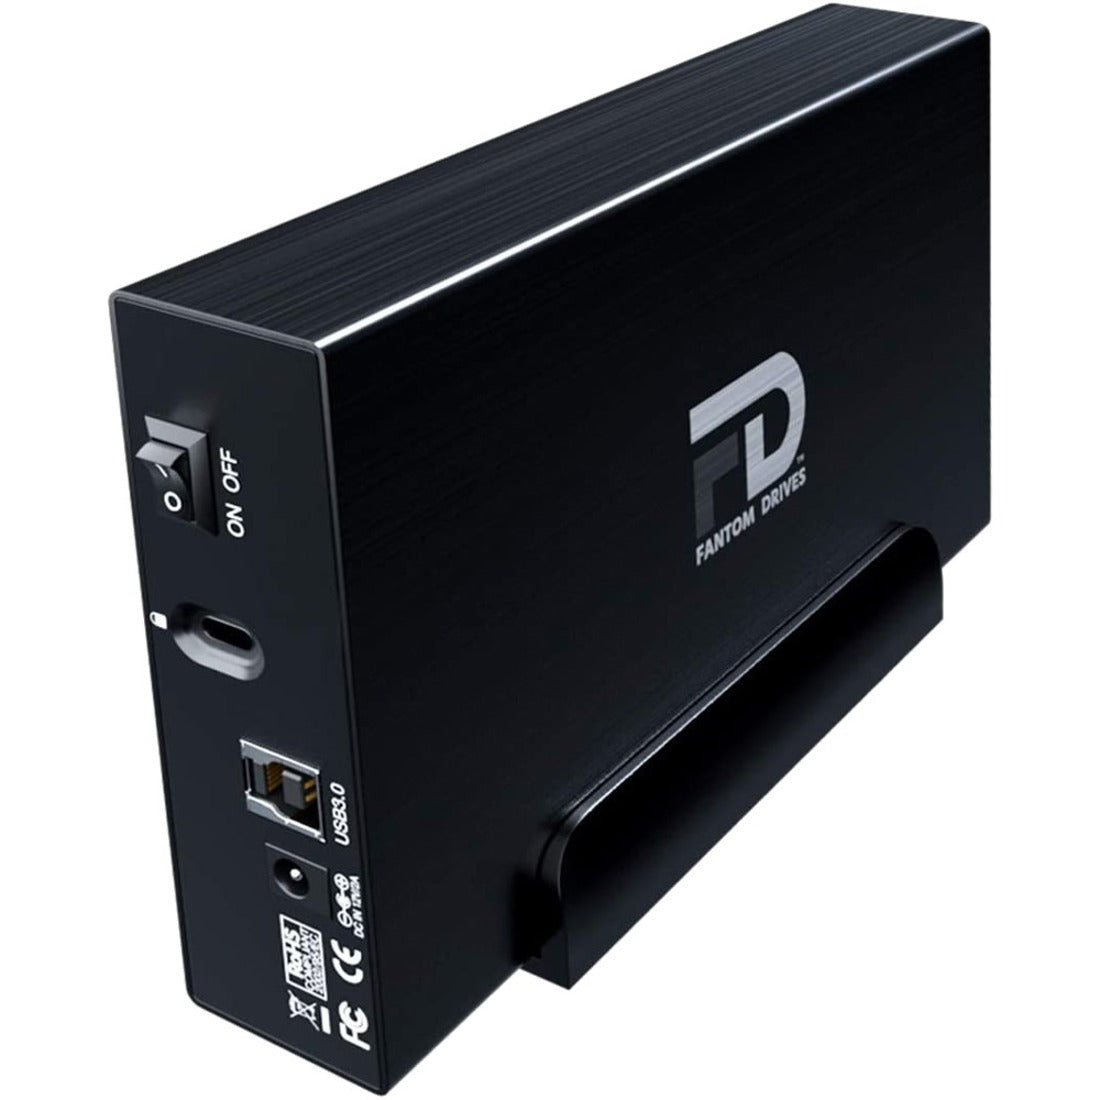 Fantom Drives GF3B2000U32 GFORCE 2TB External Hard Drive - USB 3.2 Gen 1 5Gb/s - 32MB Cache - Black, 3-Year Warranty